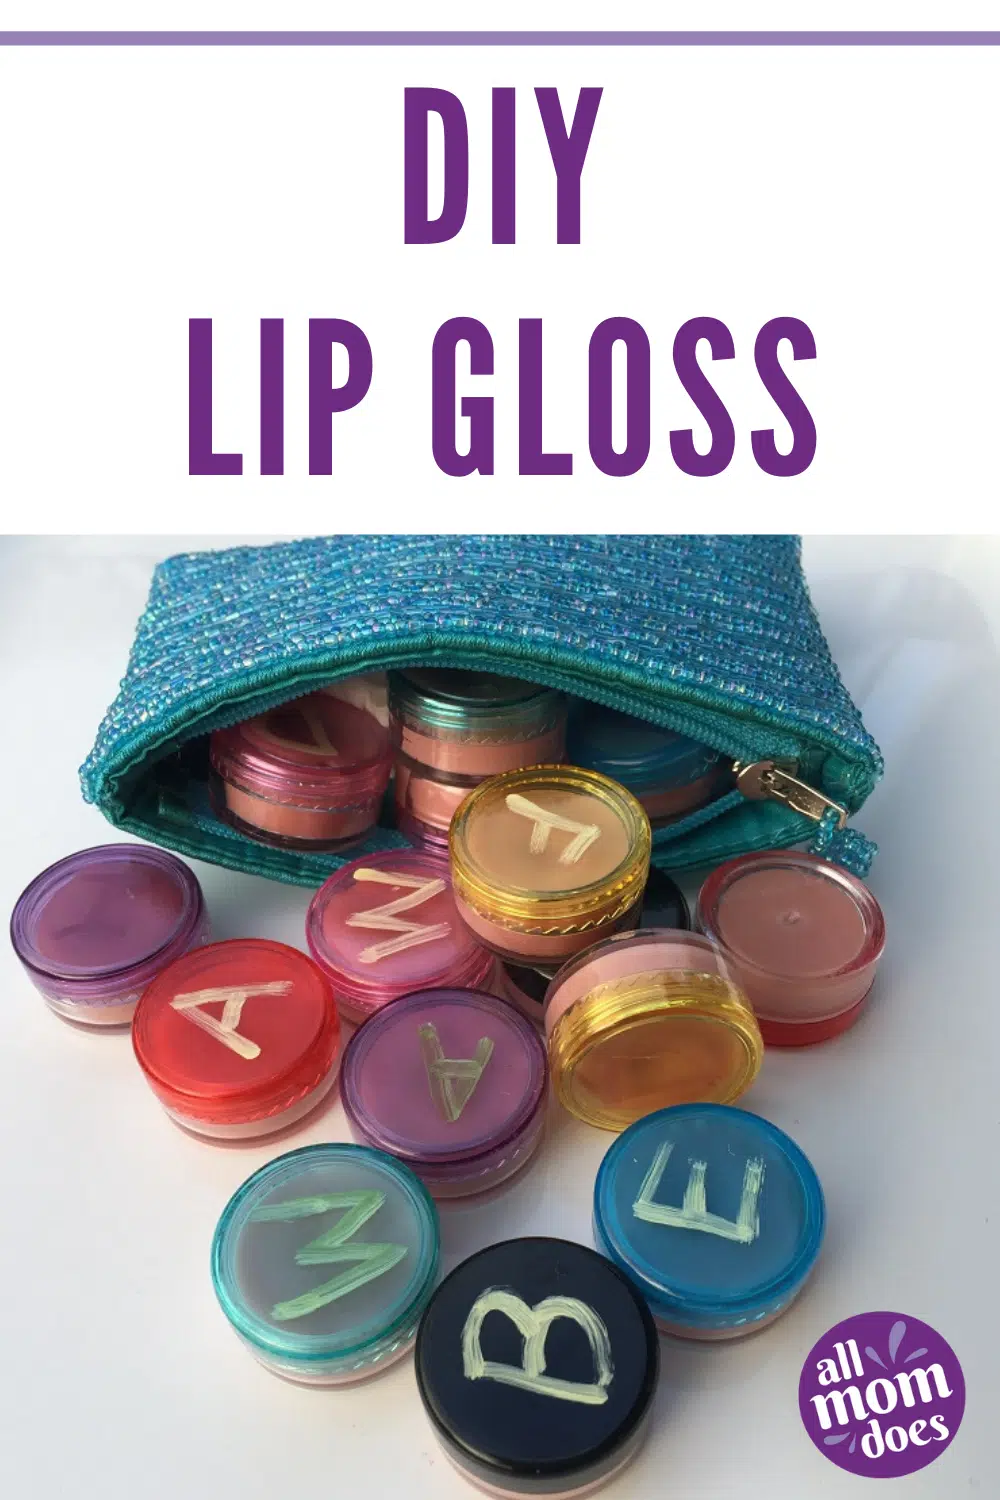 diy lip gloss recipe and instructions